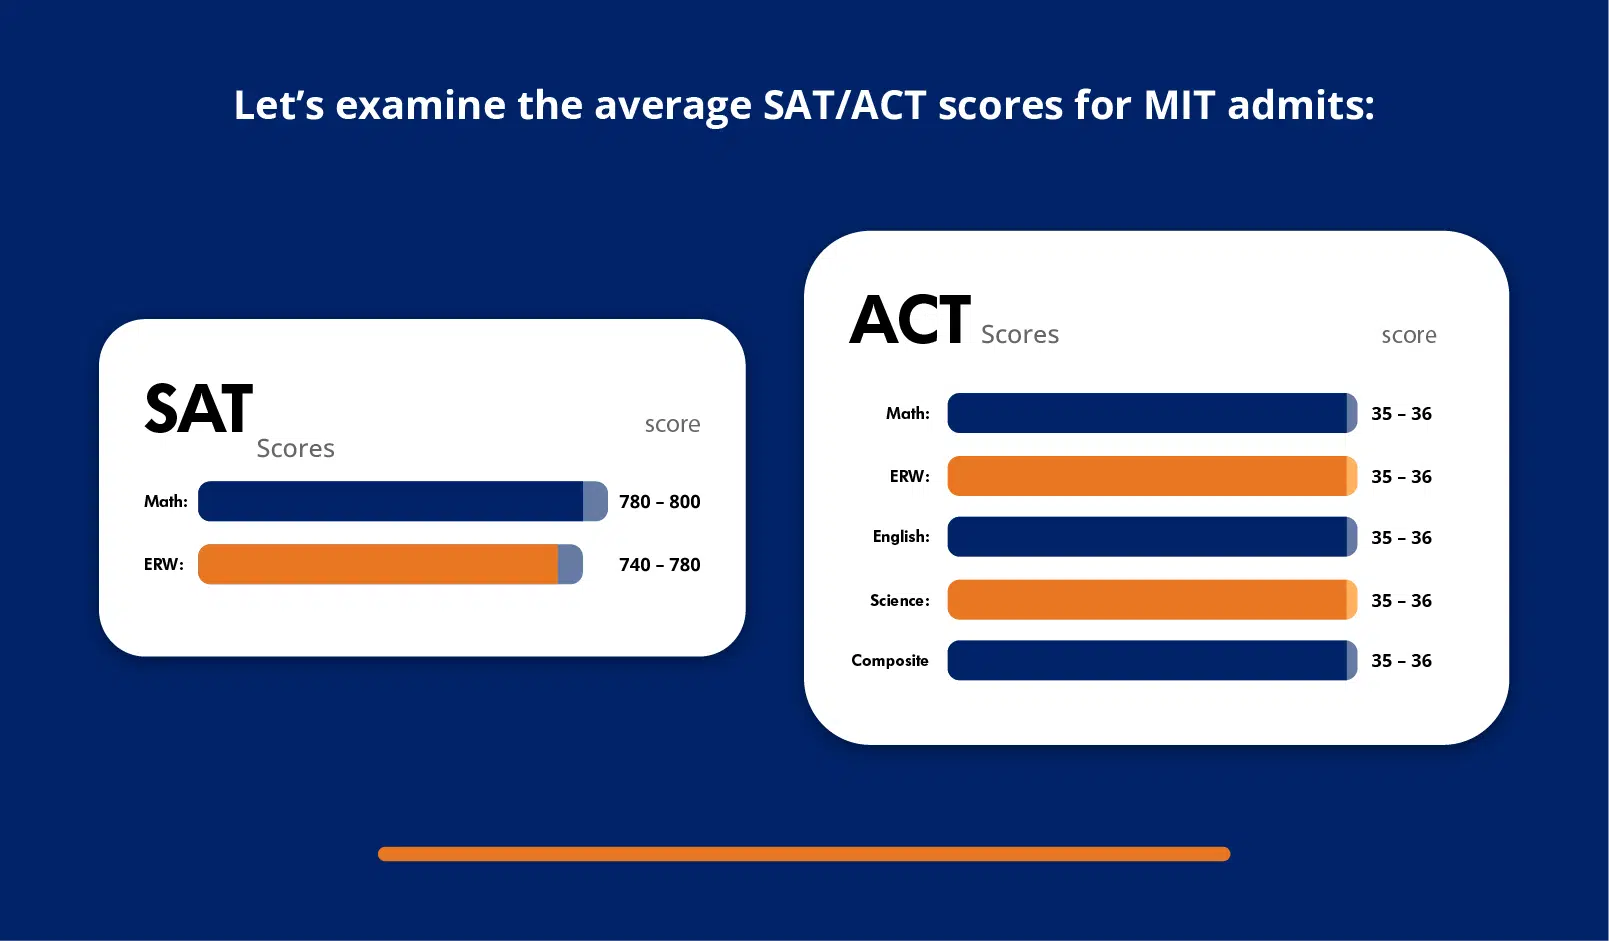 MIT Acceptance Rate